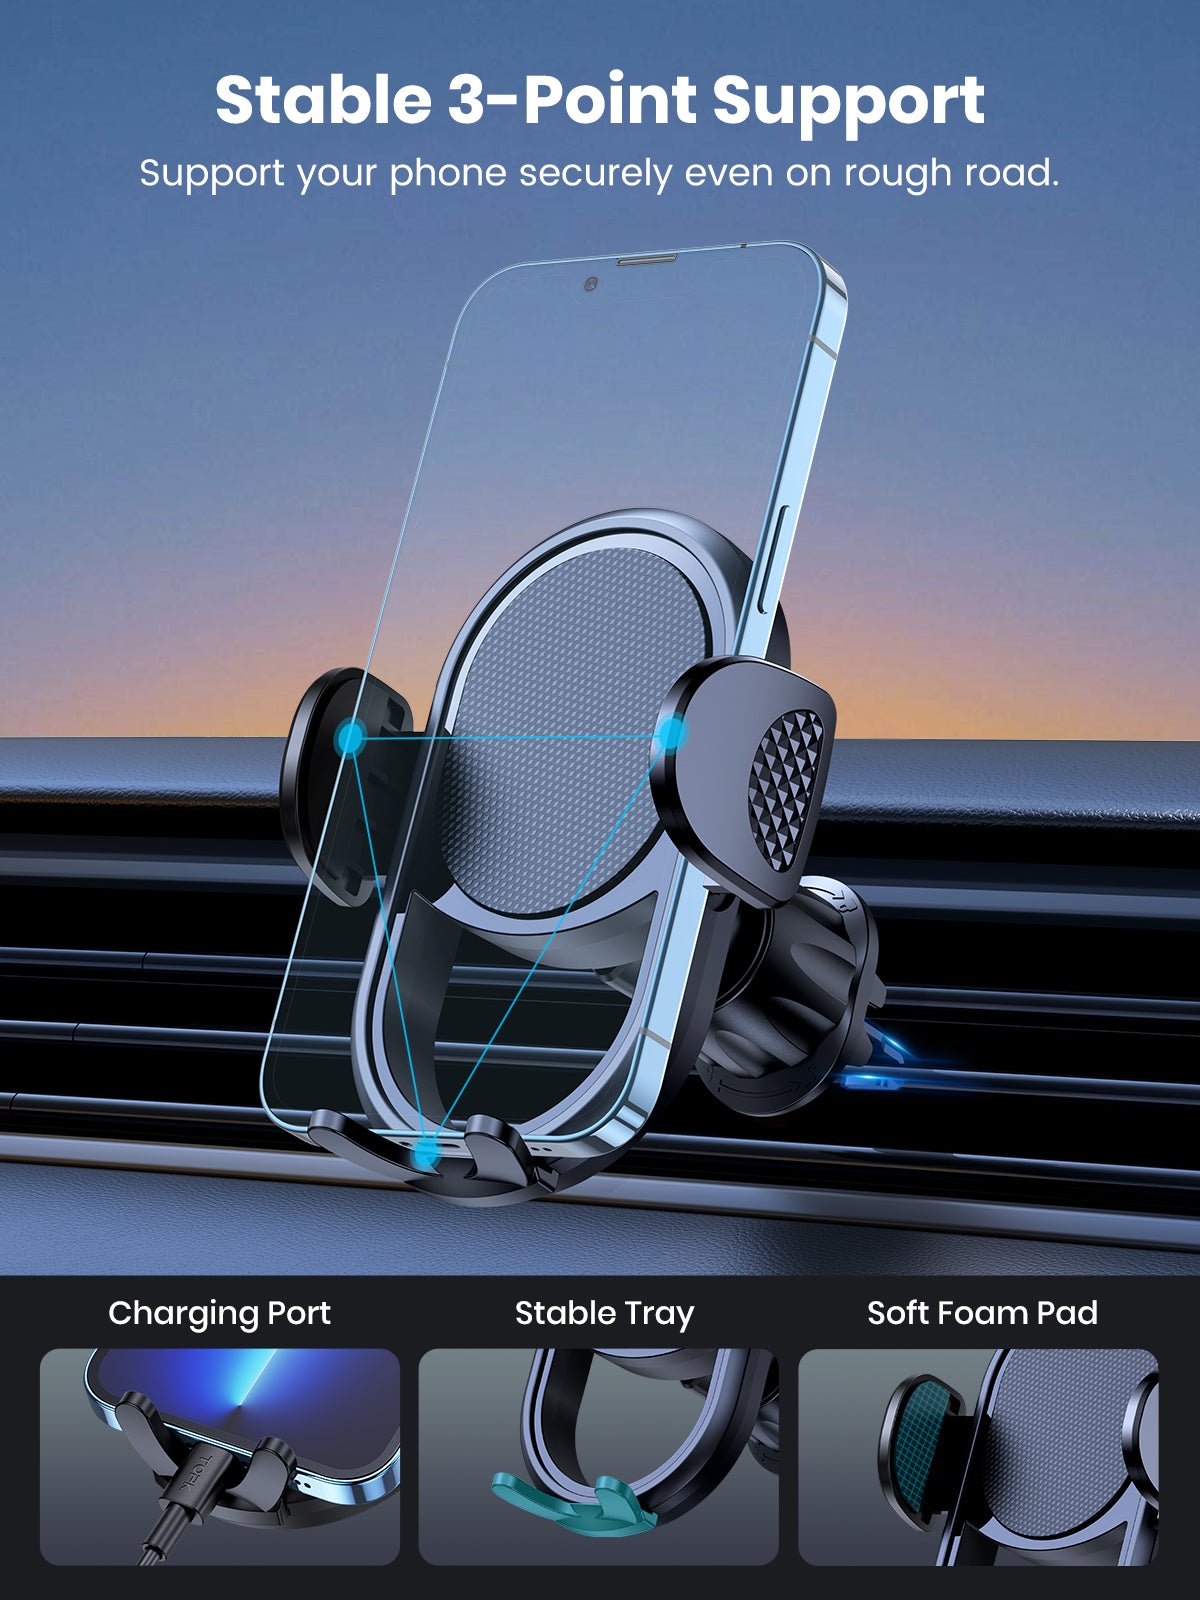 TOPK D41-G Phone Mount for Car Air Vent - TOPK Official Store